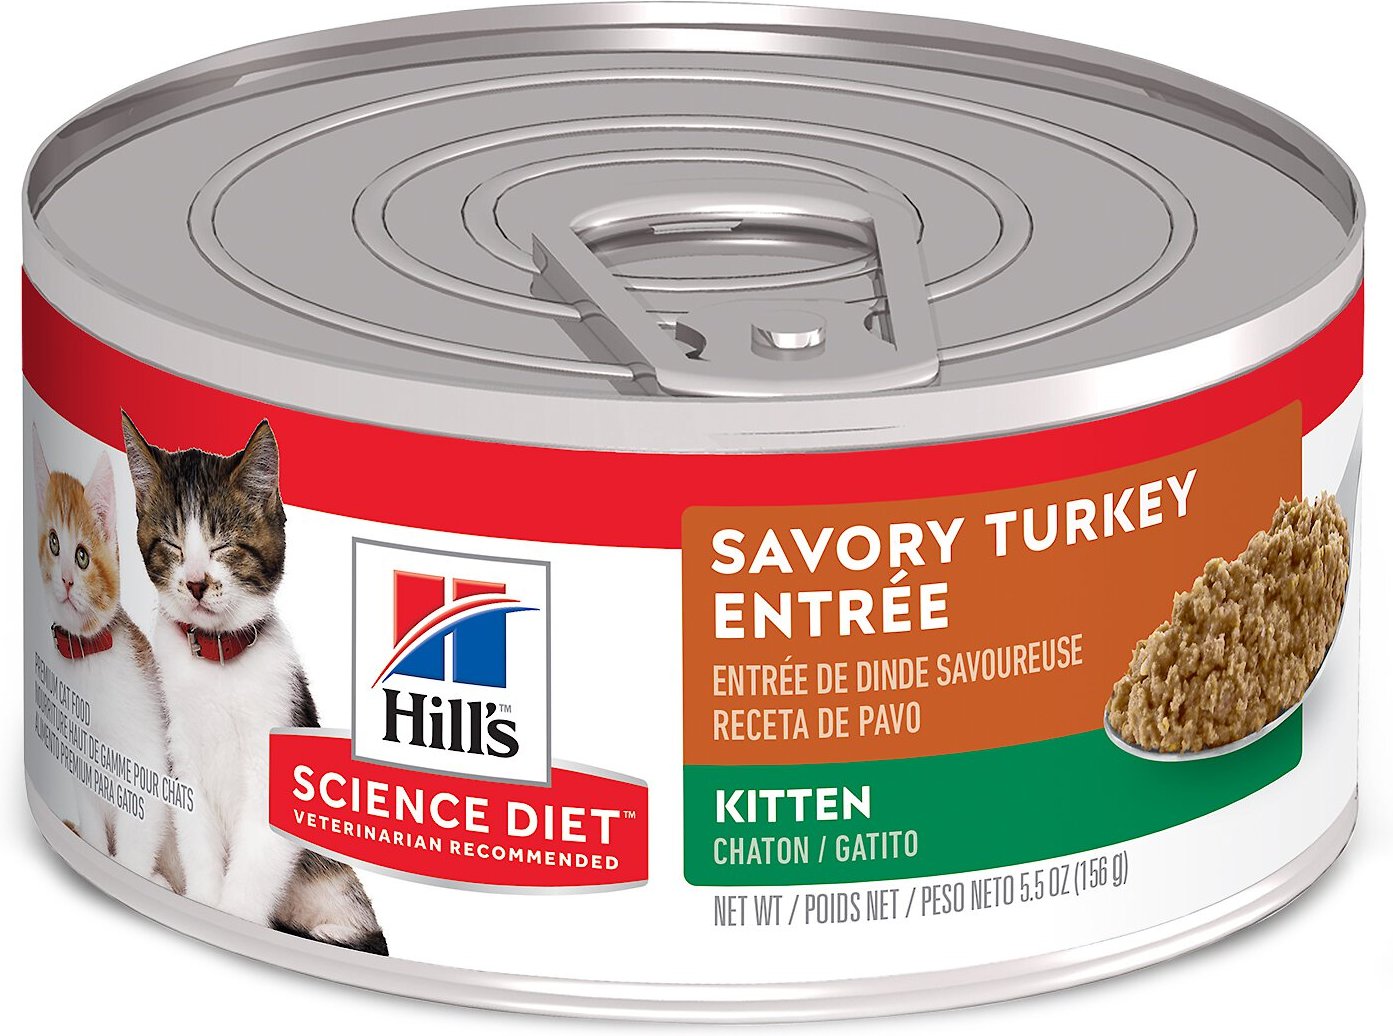 Hill's Science Diet Kitten Savory Turkey Canned Cat Food